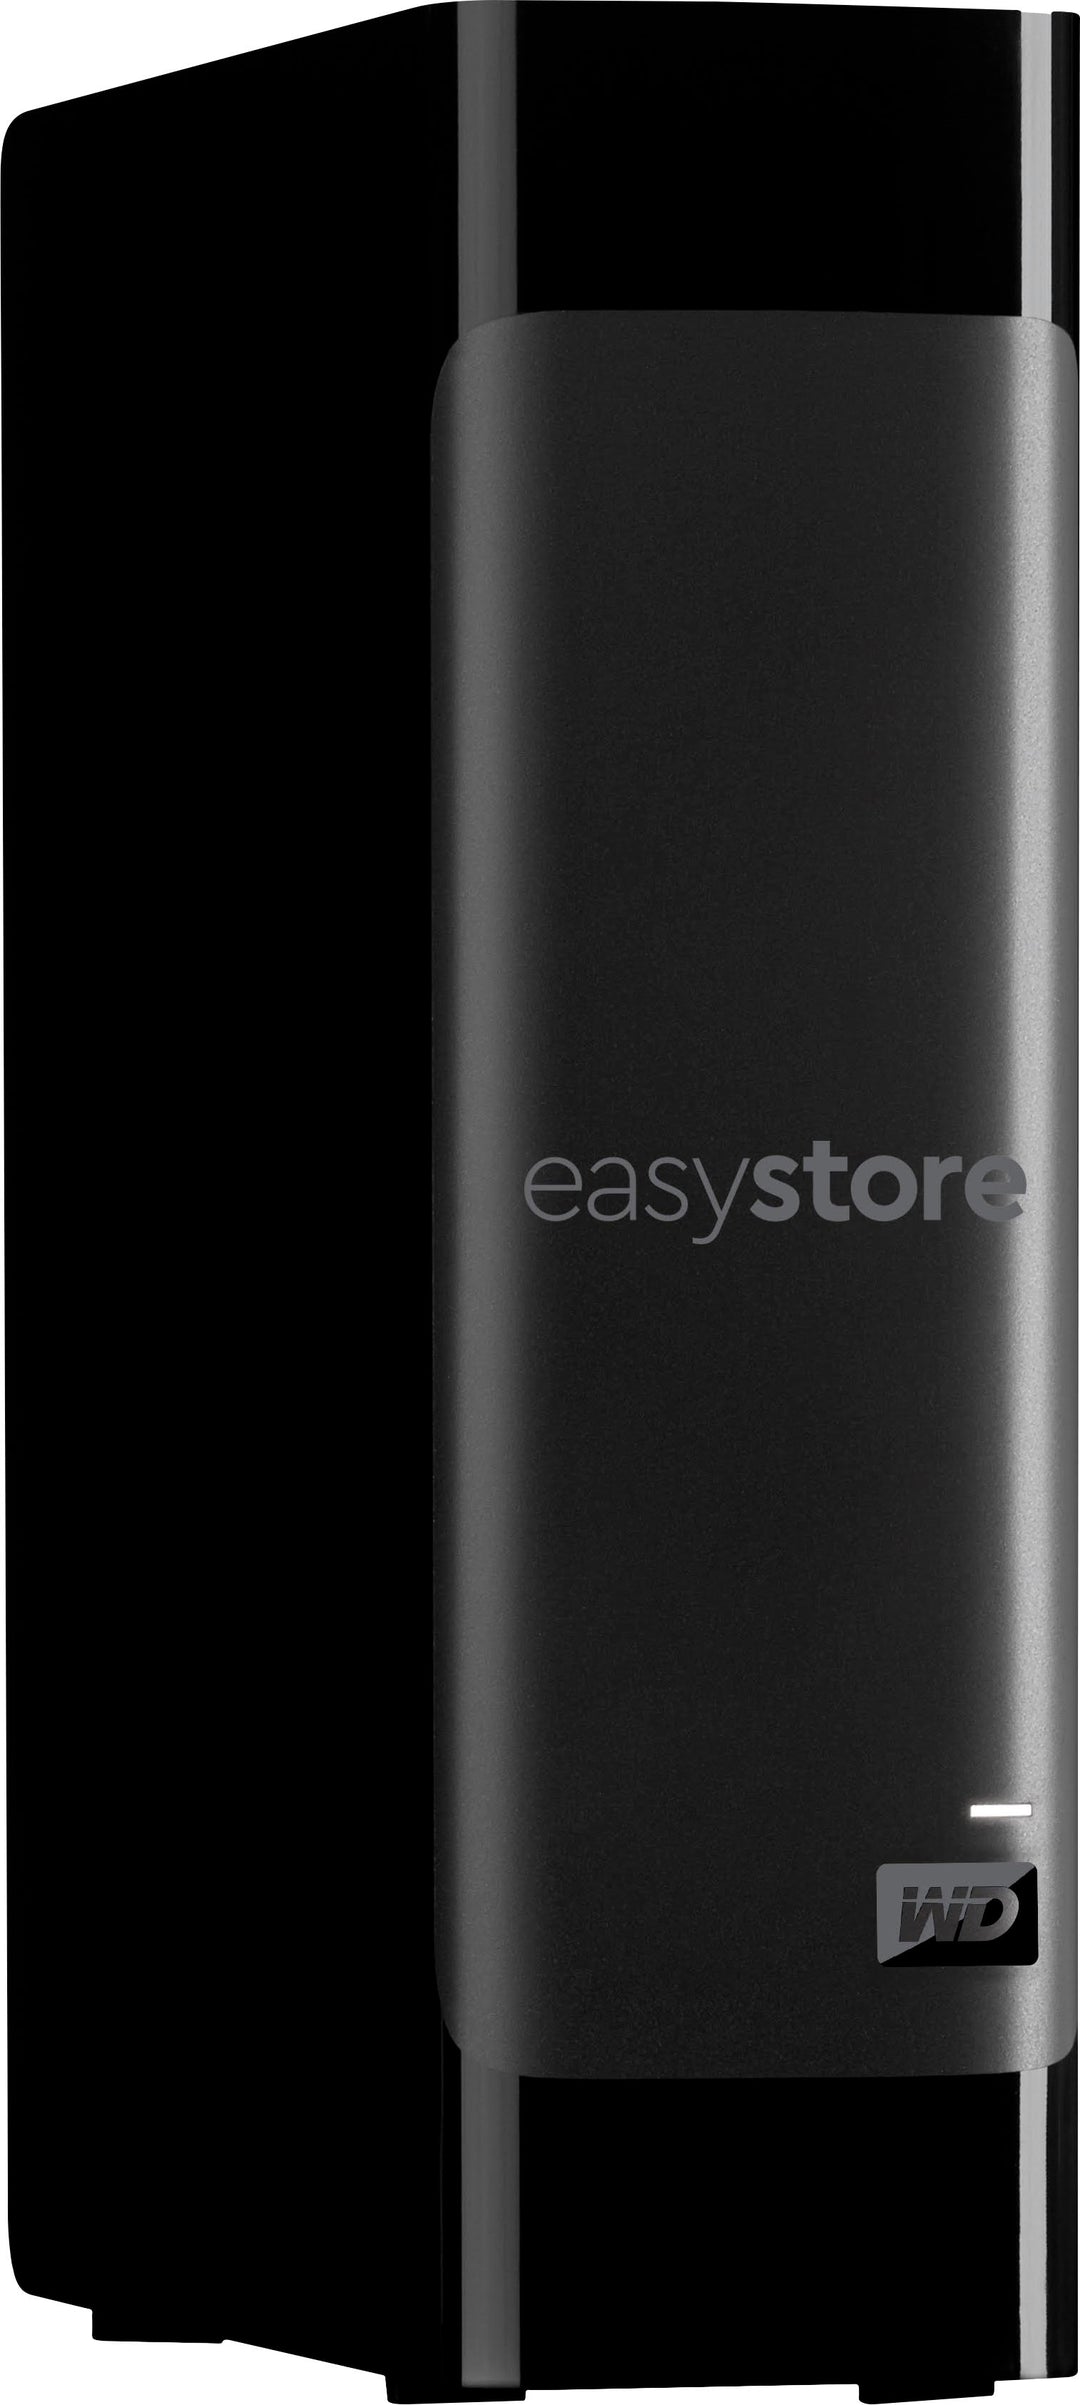 WD - easystore 20TB External USB 3.0 Hard Drive - Black_3